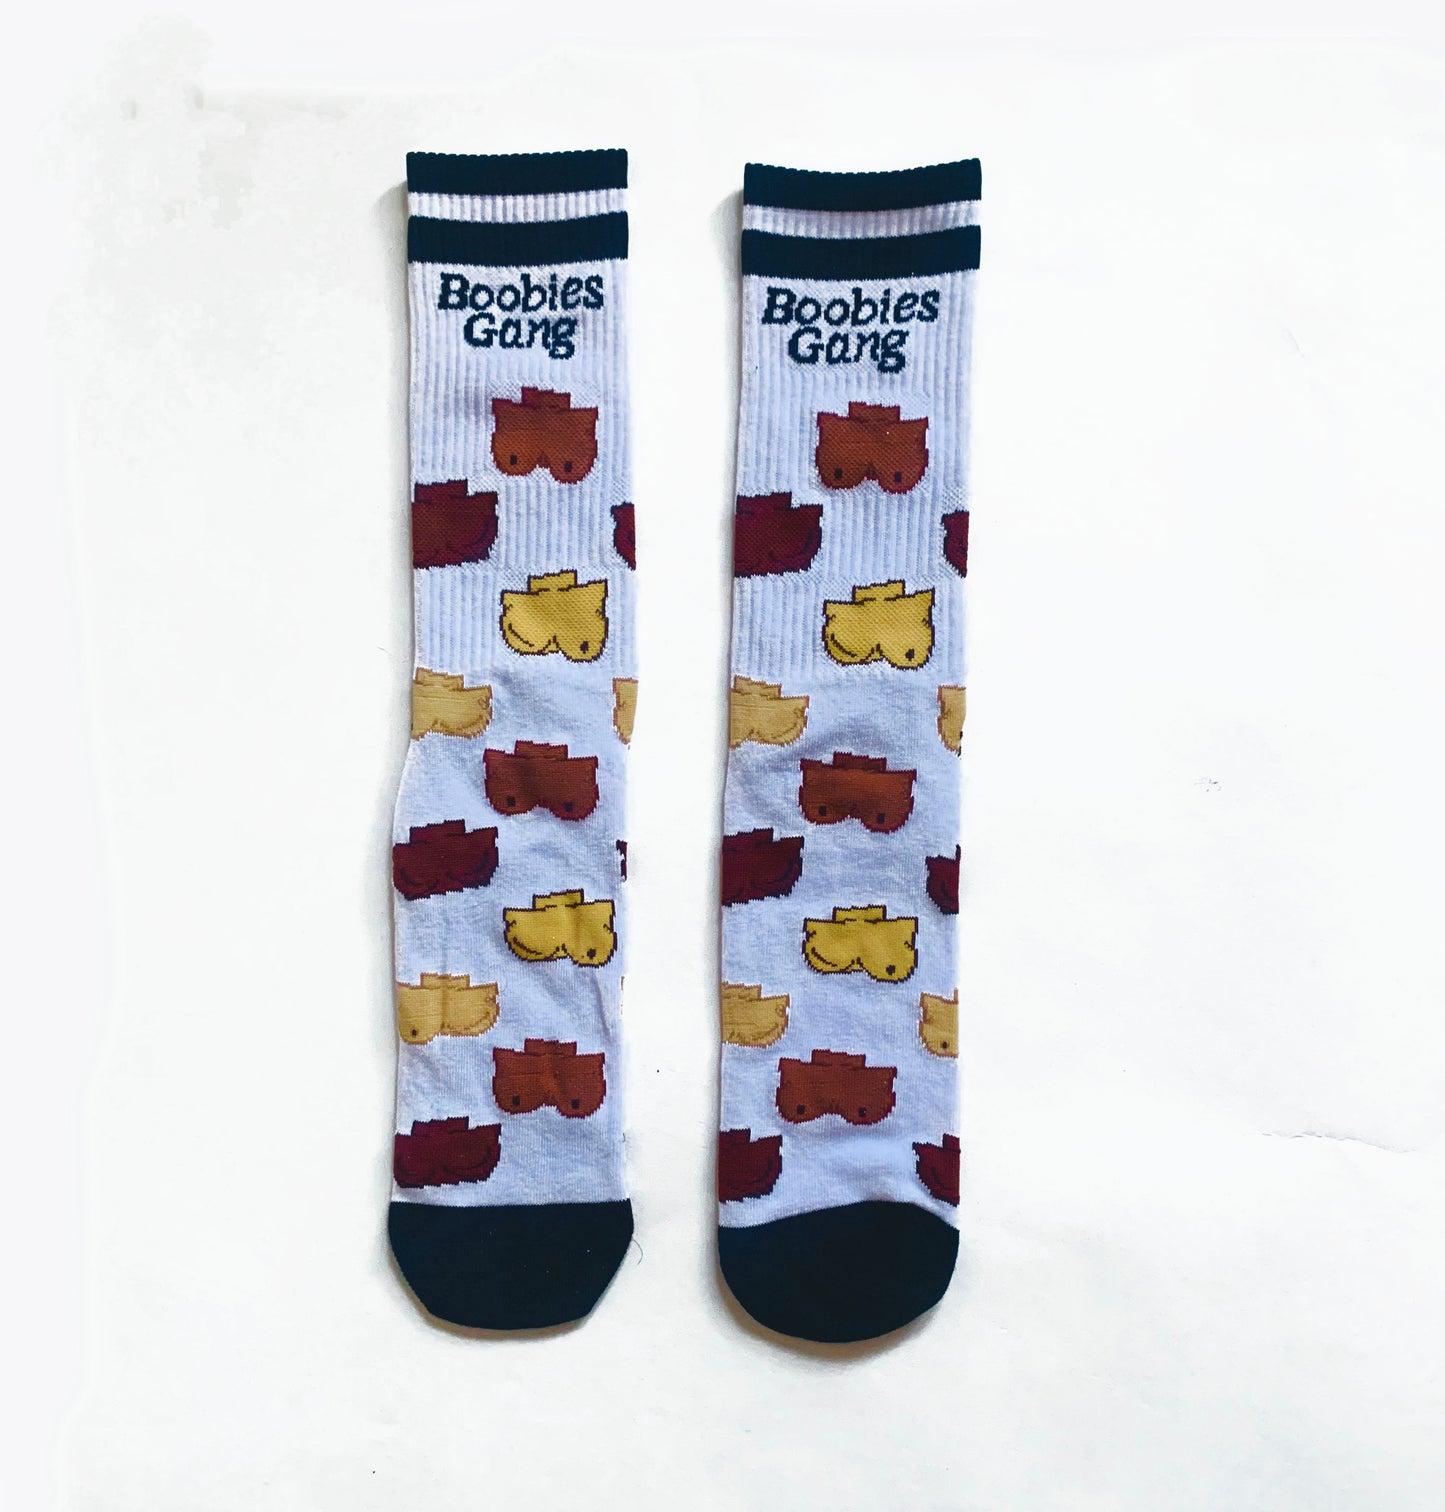 Boobies Gang Socks